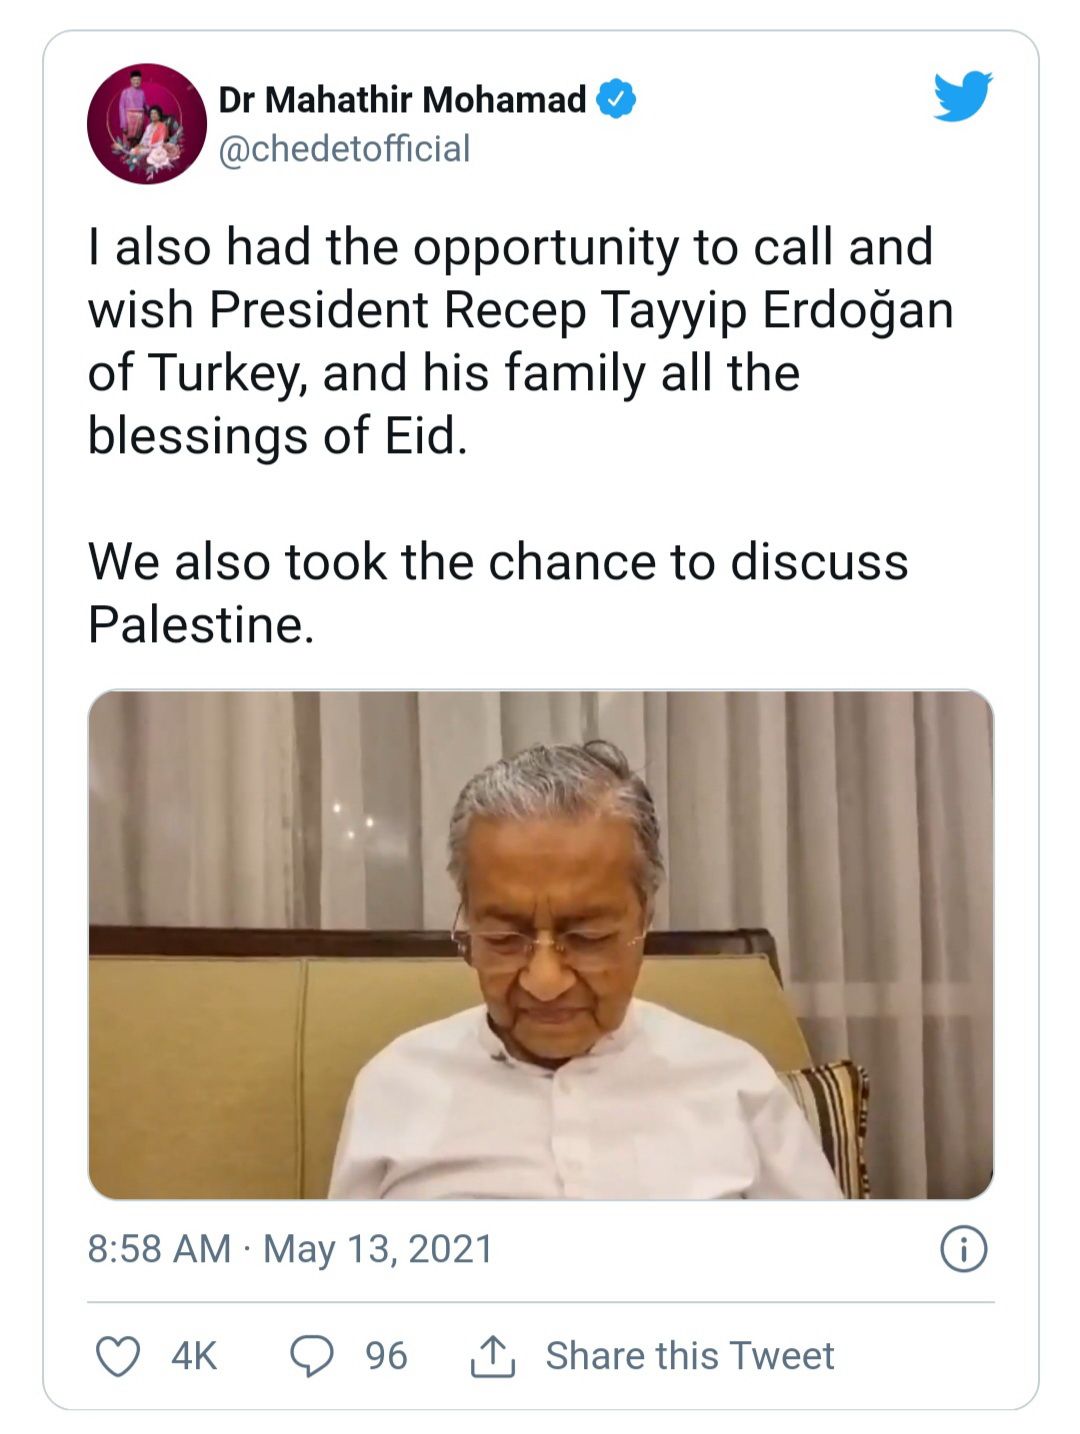  Dr Mahathir Mohamad dalam cuitan di twitter-nya yang berkesempatan menelepon dan mengucapkan selamat Idul Fitri kepada Presiden Recep Tayyip Erdoğan dari Turki dan keluarganya. mereka juga mengambil kesempatan untuk berdiskusi tentang Palestina.  